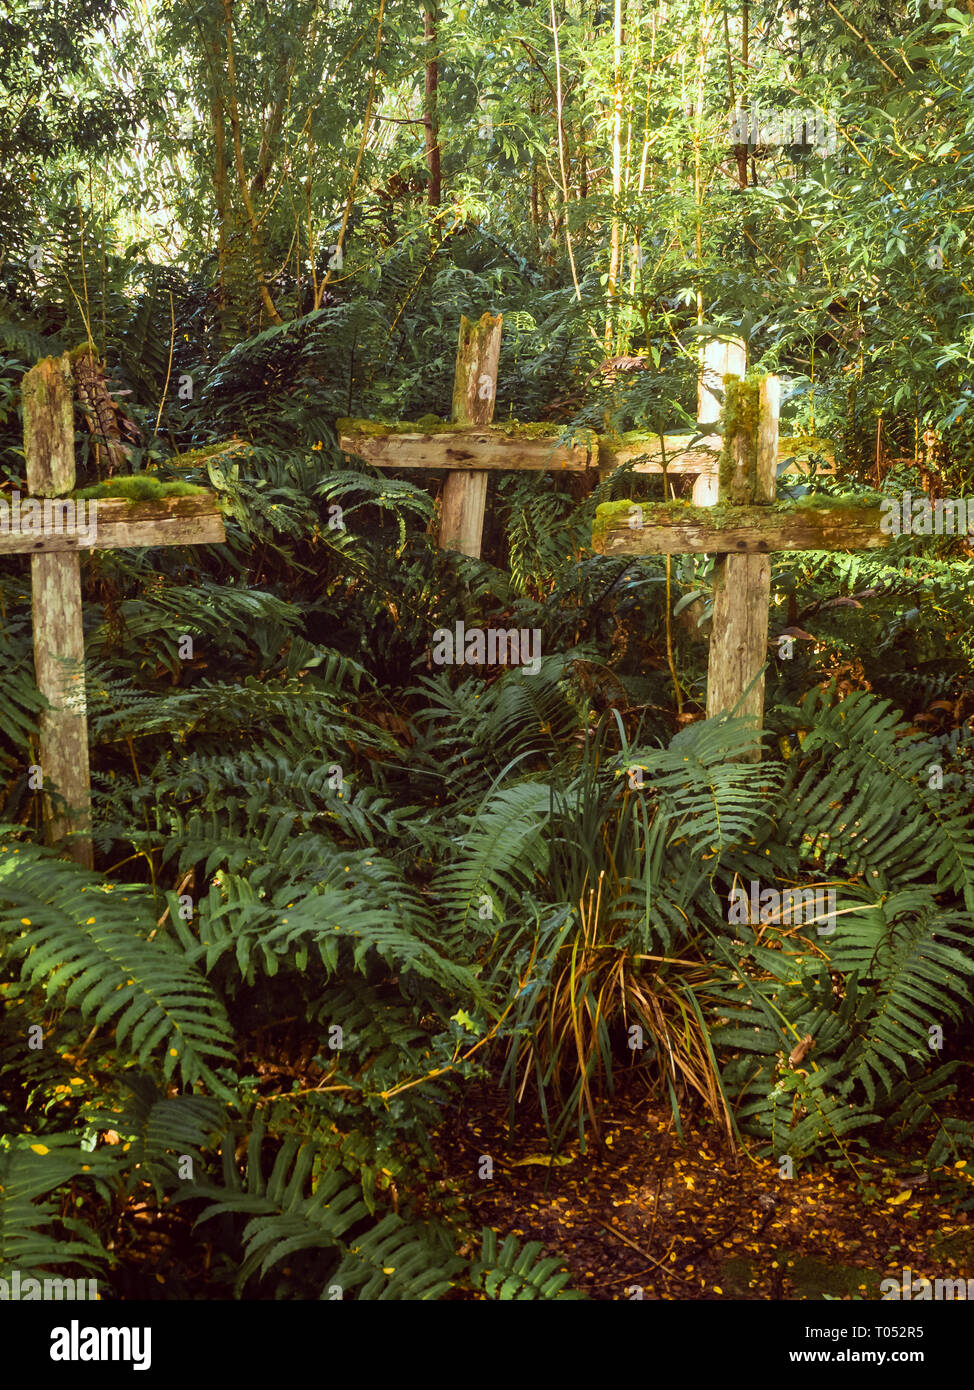 Wood cross in patagonian cementery in Chile, Caleta Tortel. Dead island in river Baker Stock Photo